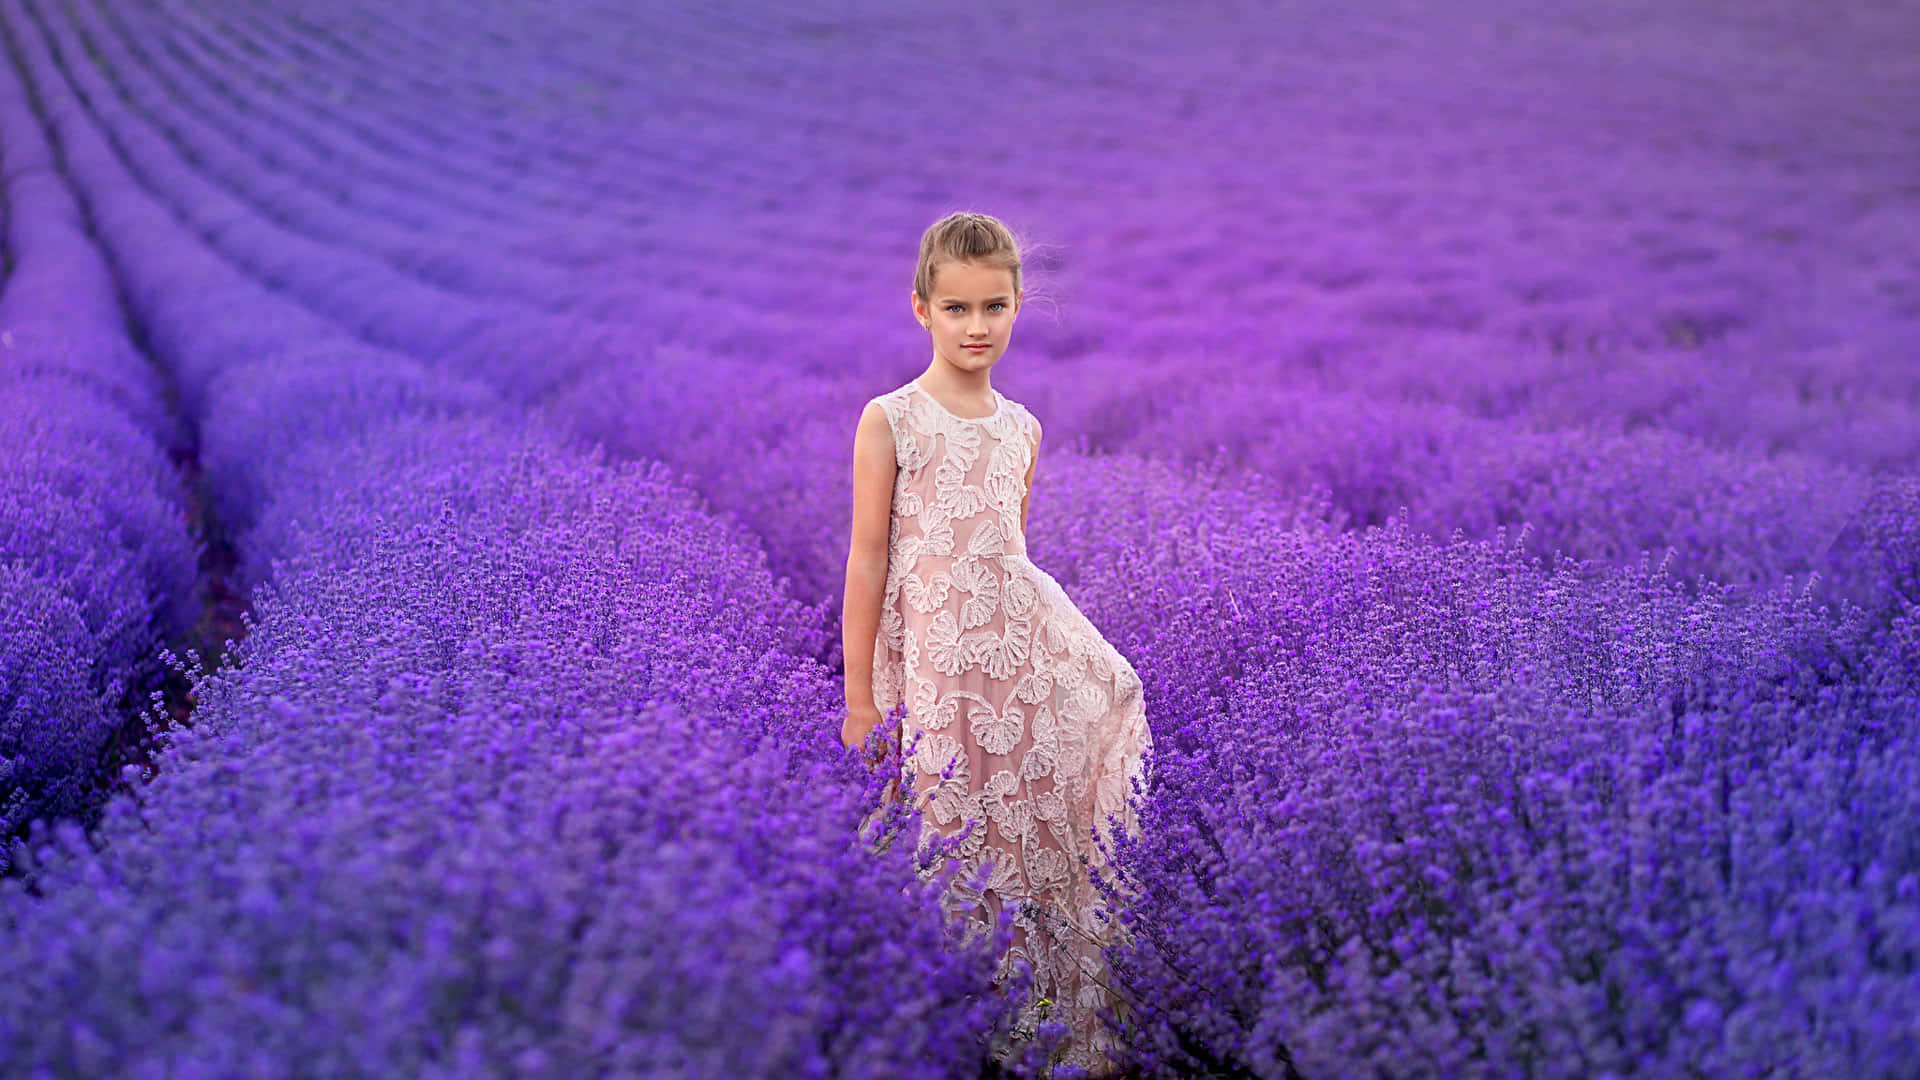 Girlin Lavender Field Wallpaper